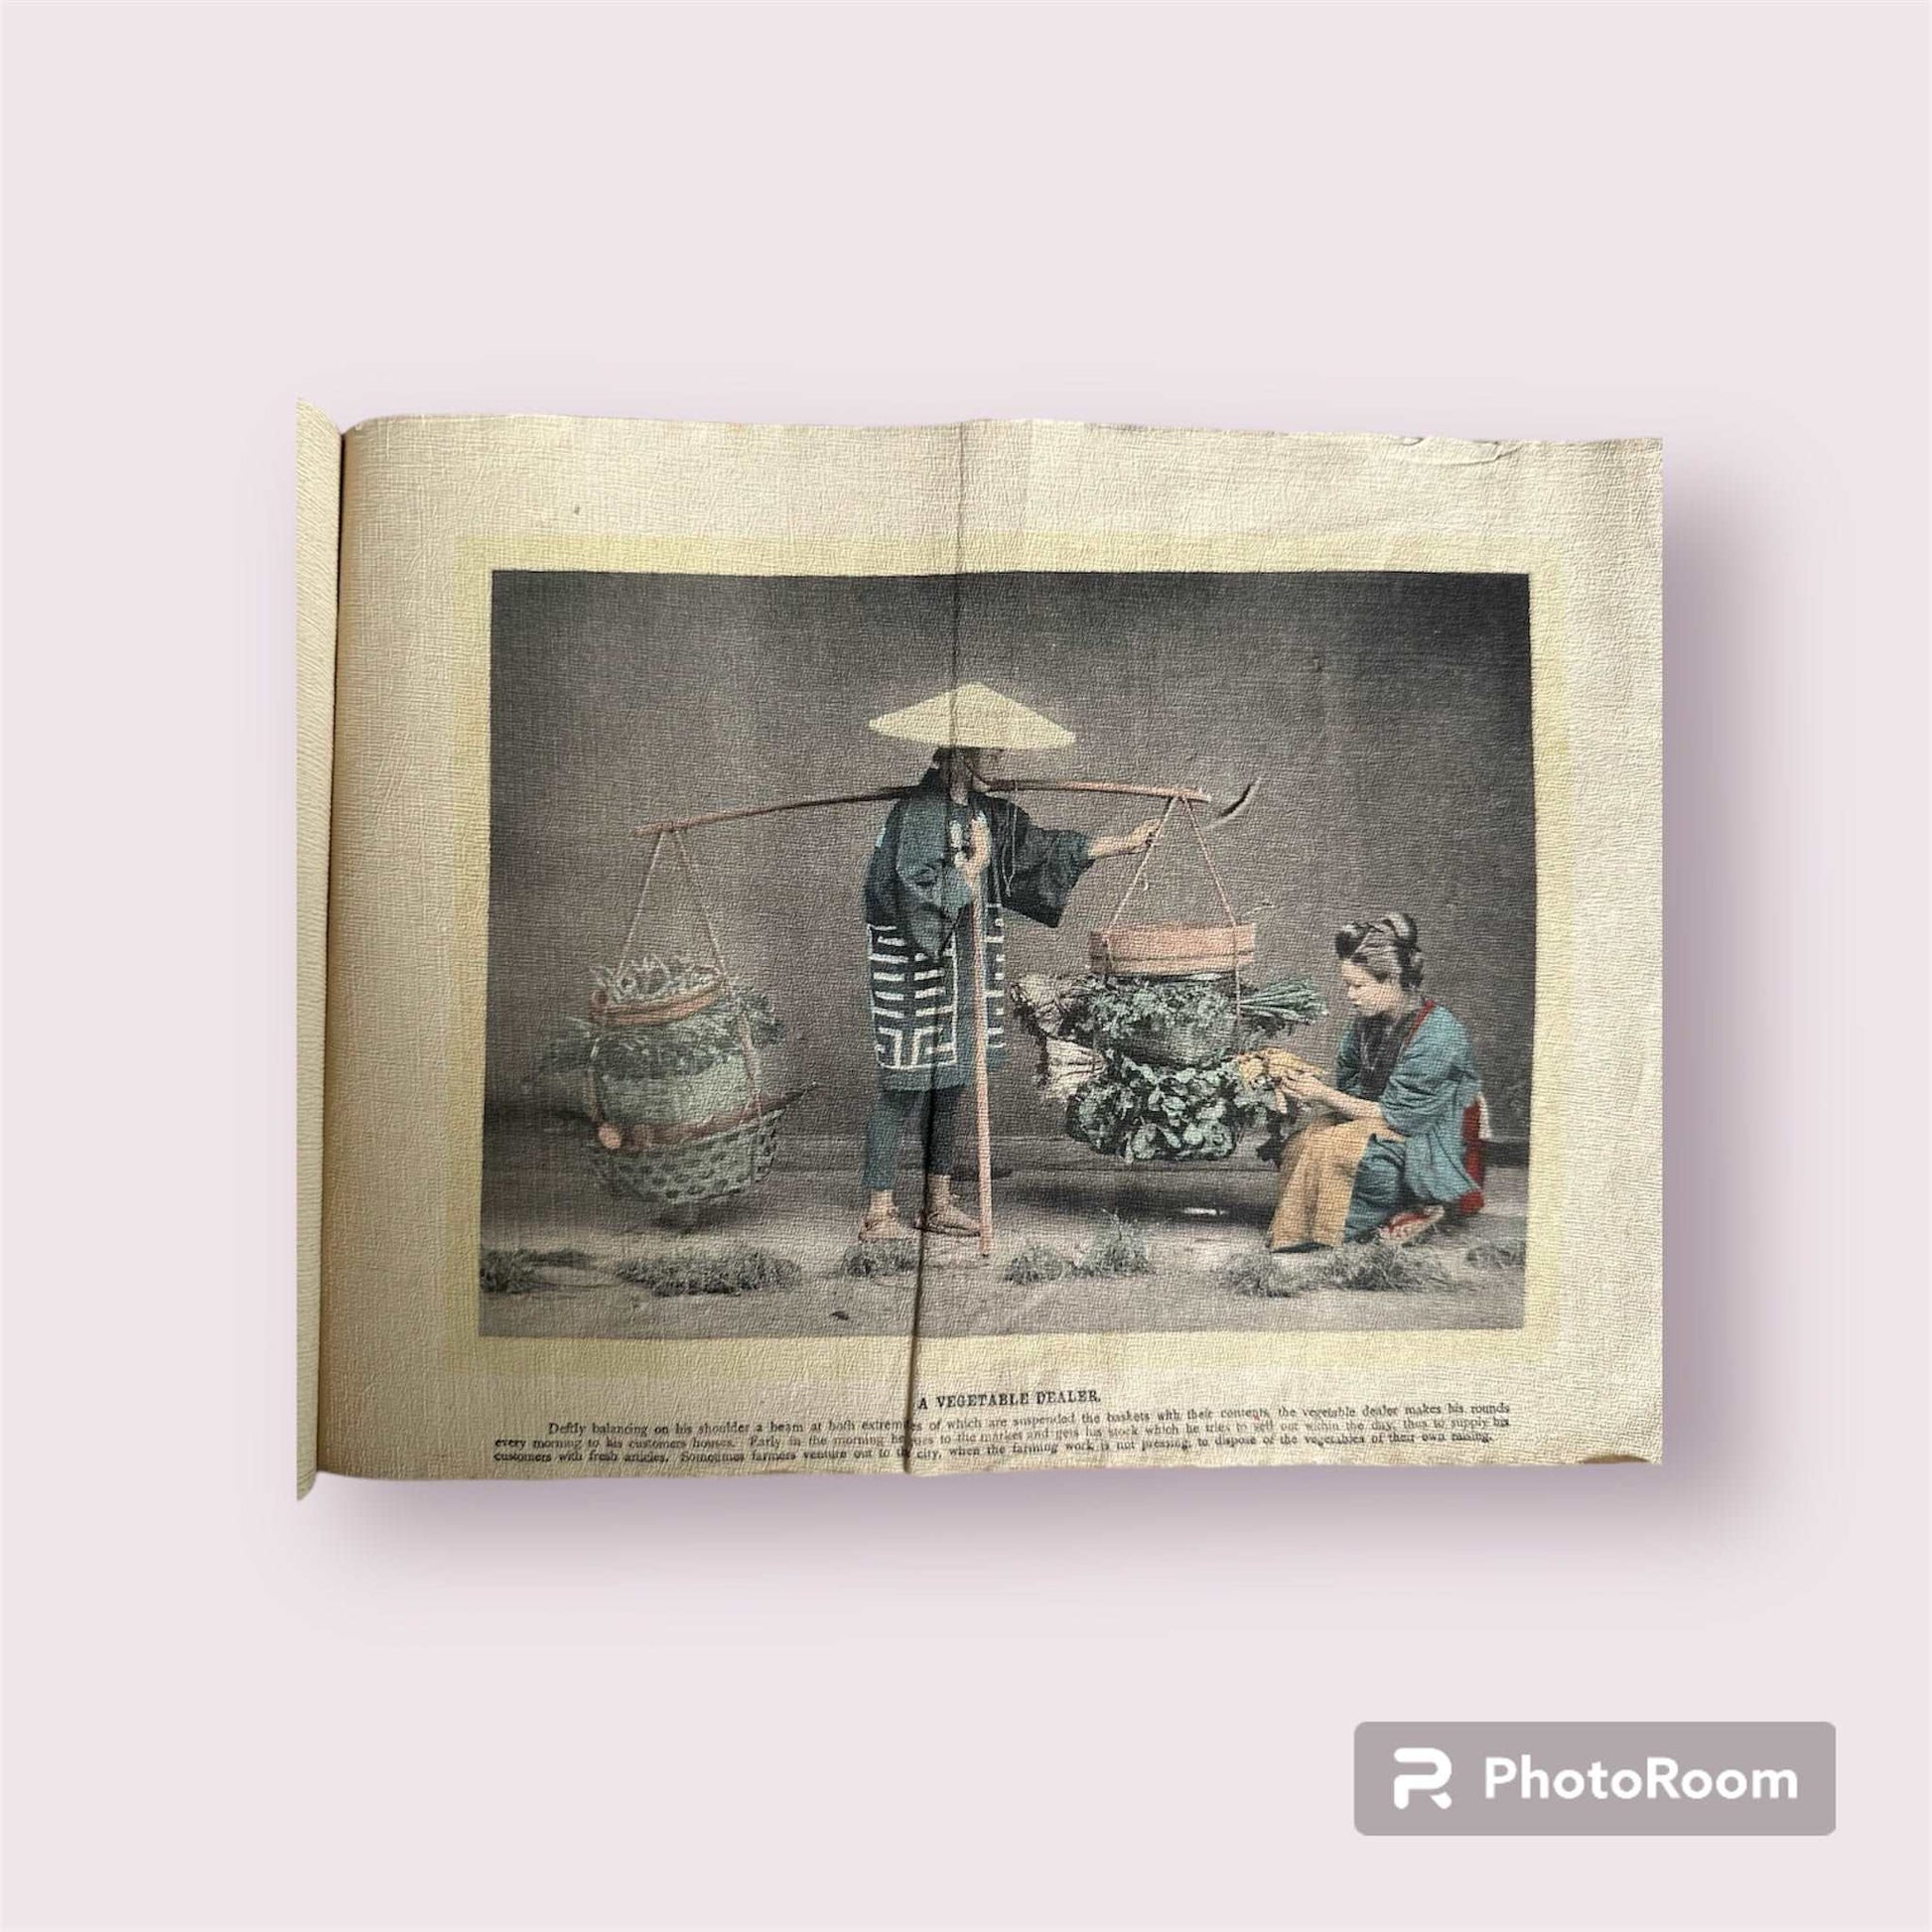 1876 Illustrations Of Japanese Life edited by Takashima published on cloth by Ogawa in Tokyo (very rare) Honeyburn Books (UK)